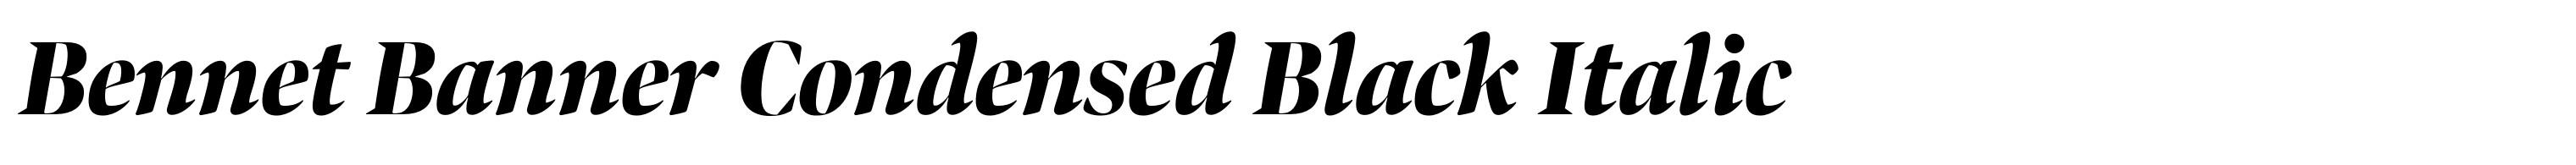 Bennet Banner Condensed Black Italic